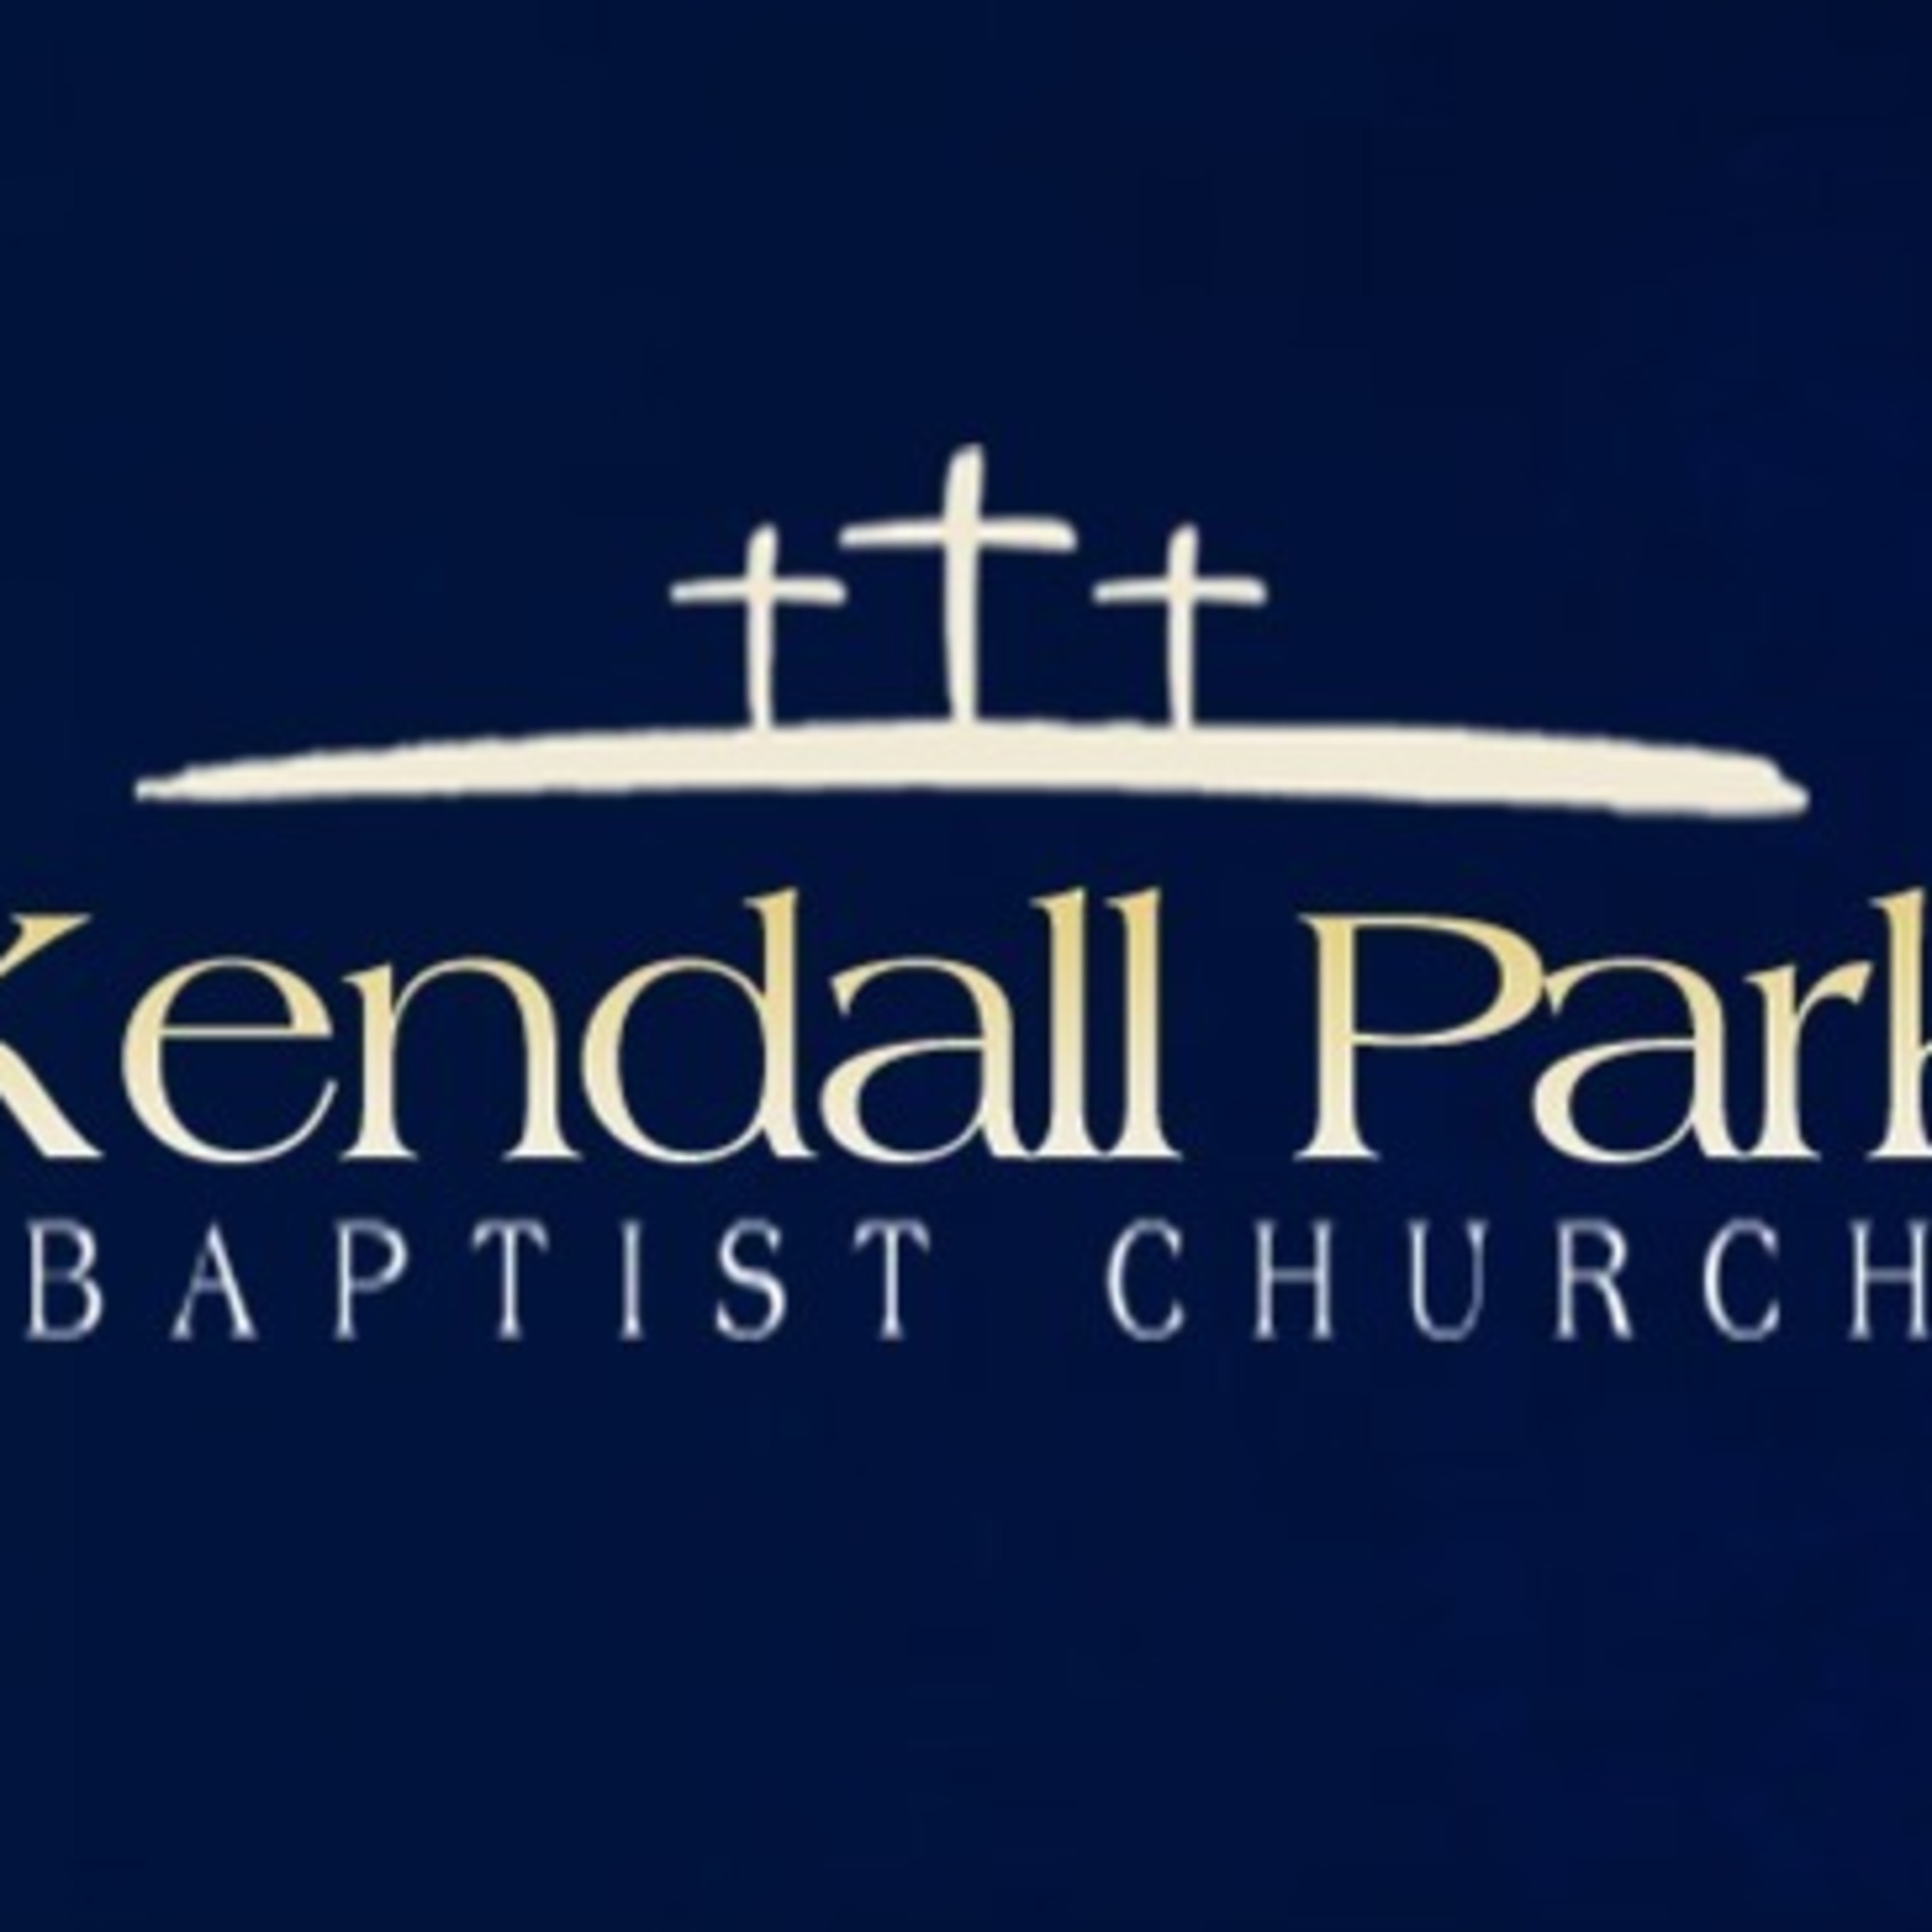 Kendall Park Baptist Church